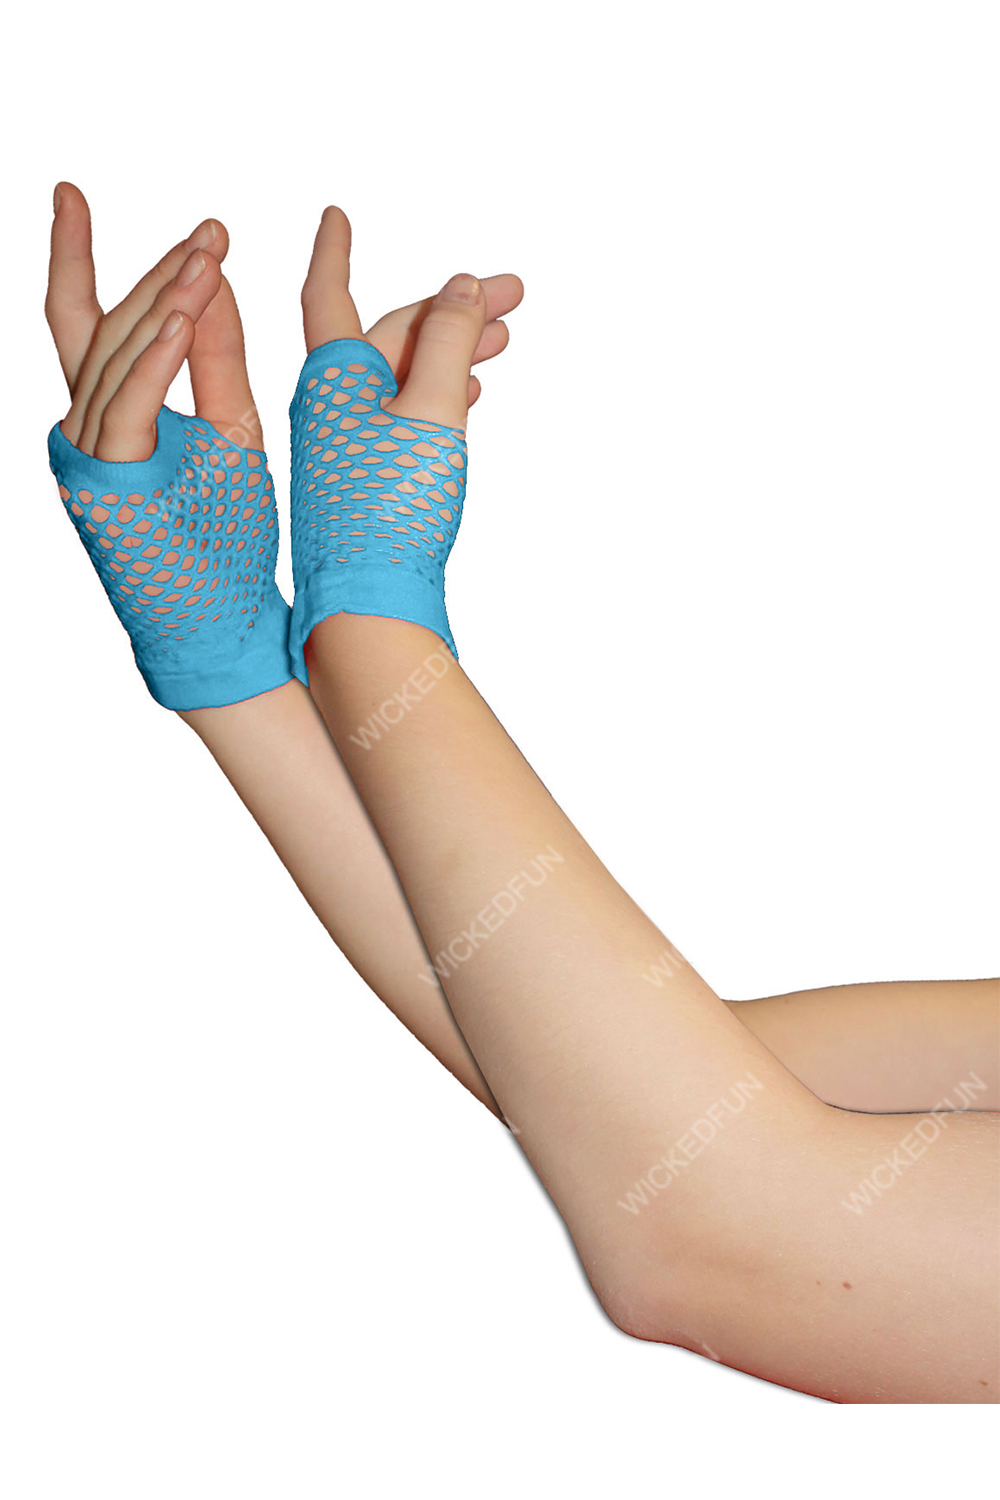 Wickedfun Turquoise Fingerless Short Fishnet Gloves (Pack of 12 pairs)